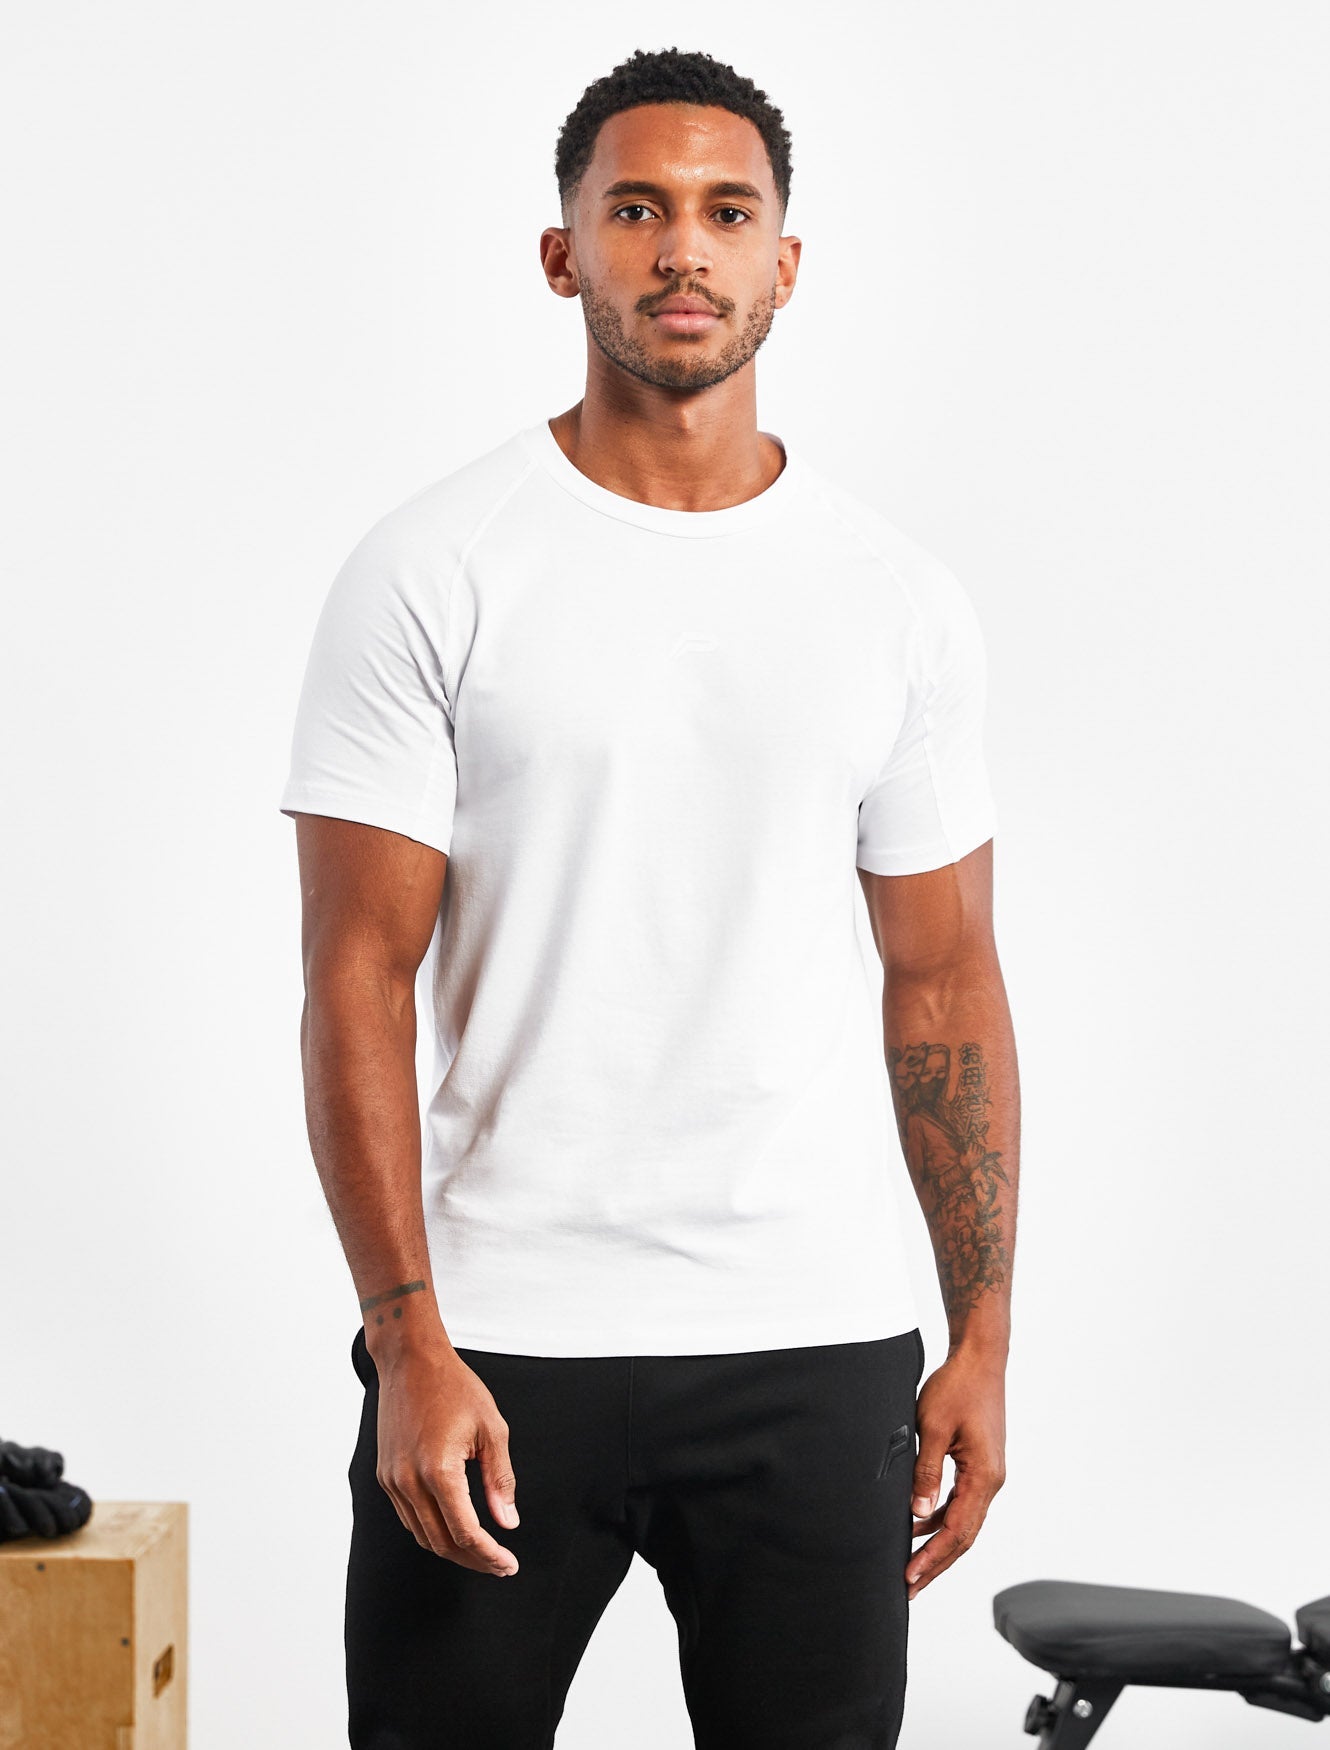 Icon T-Shirt / White Pursue Fitness 1